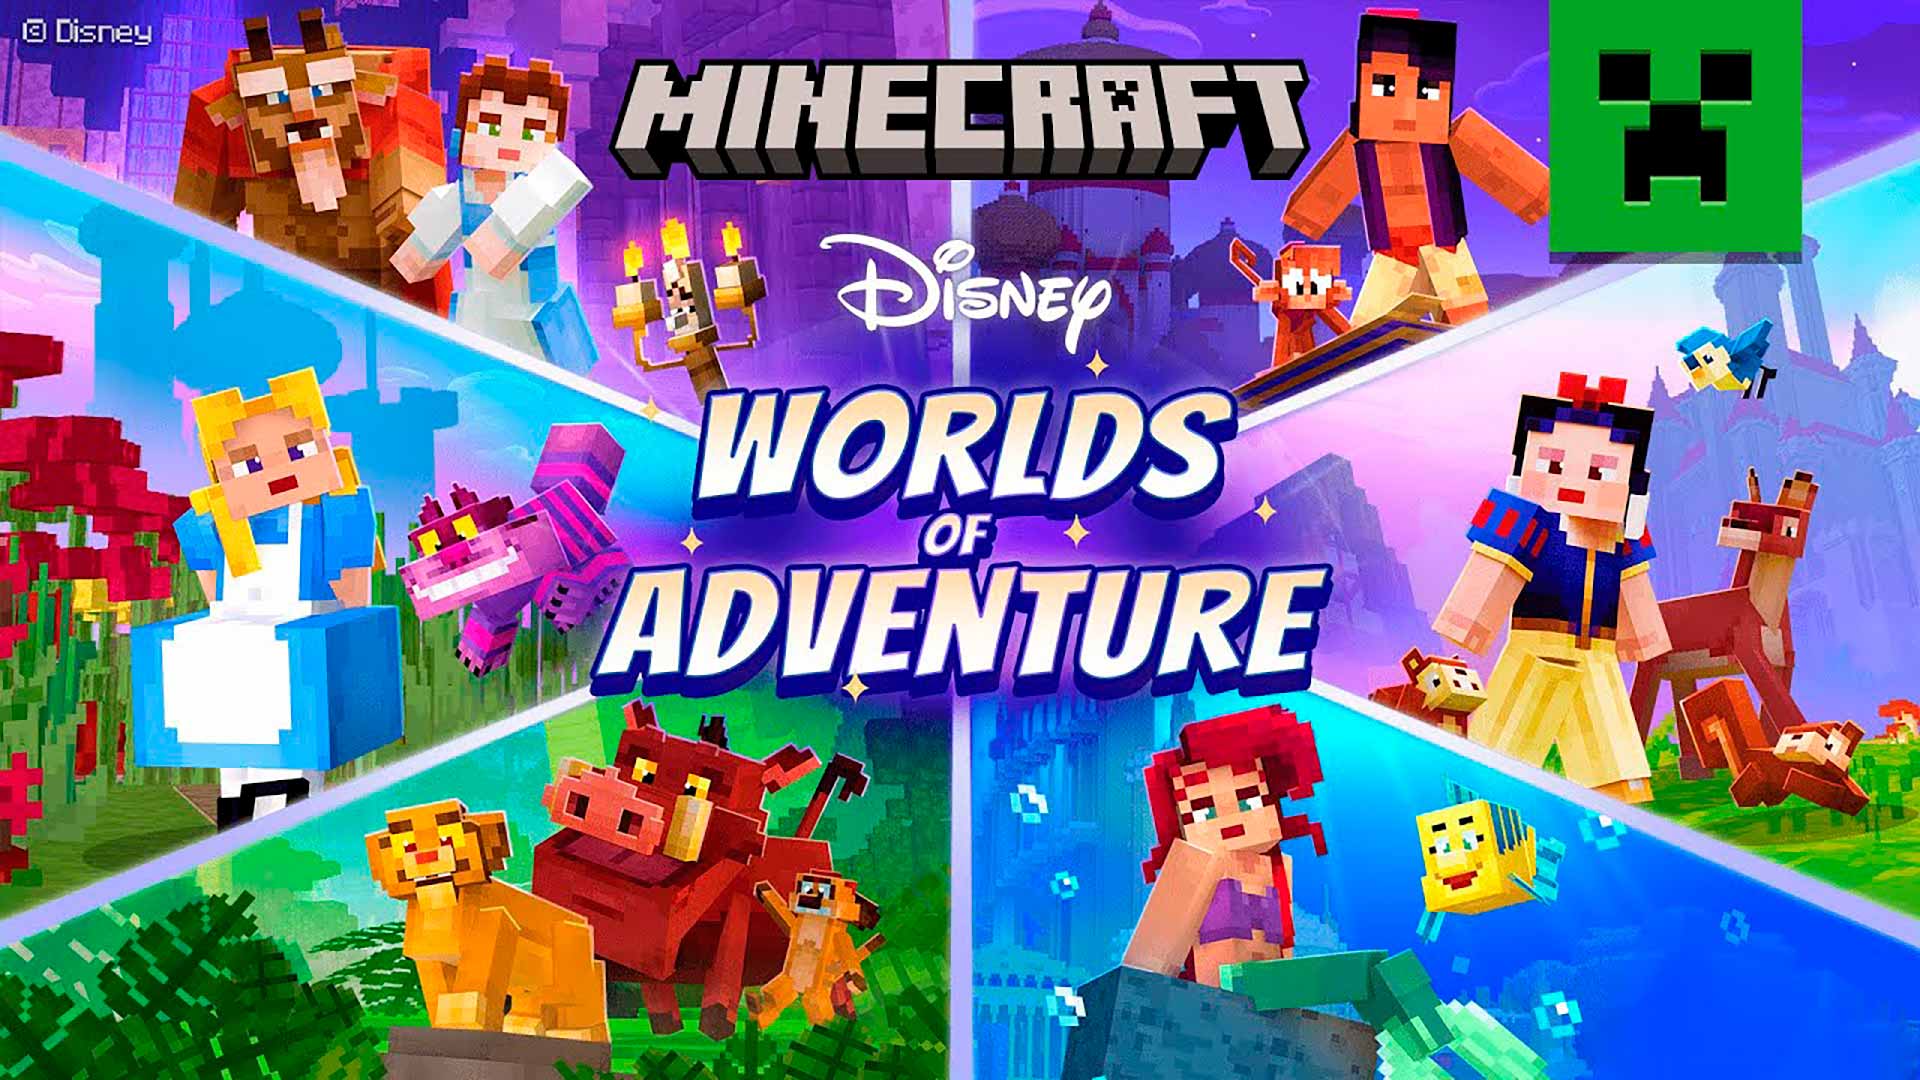 Disney Worlds of Adventure Minecraft Bedrock Edition